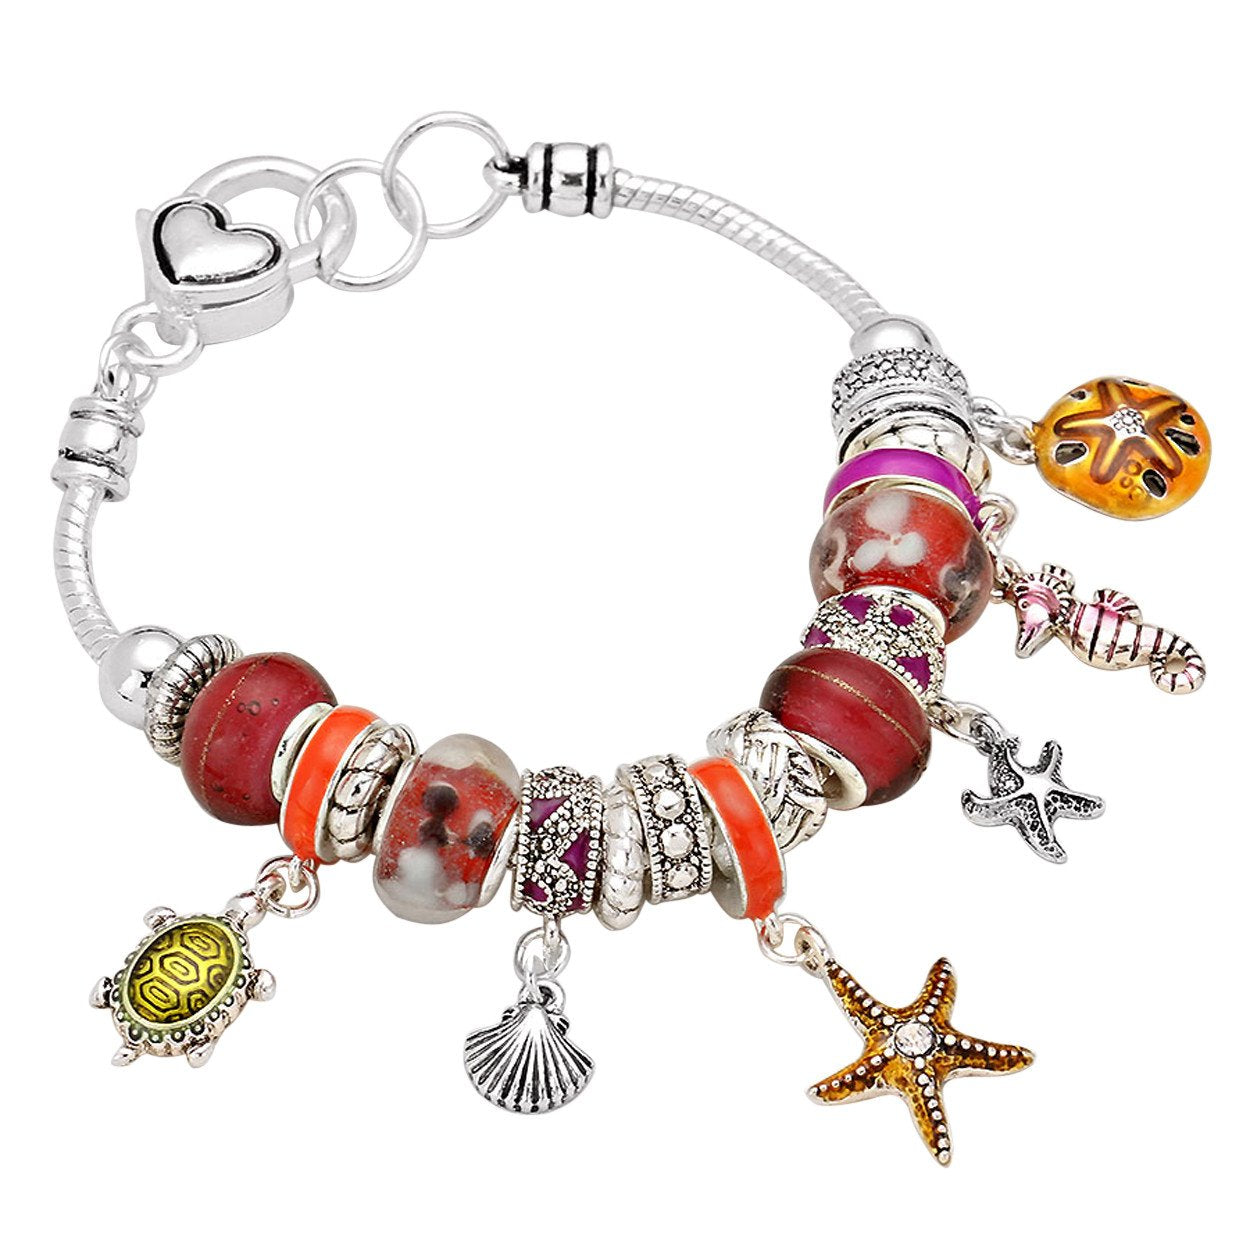 Building Your Own Pandora Bracelet - Mariani Jewellers Oakville